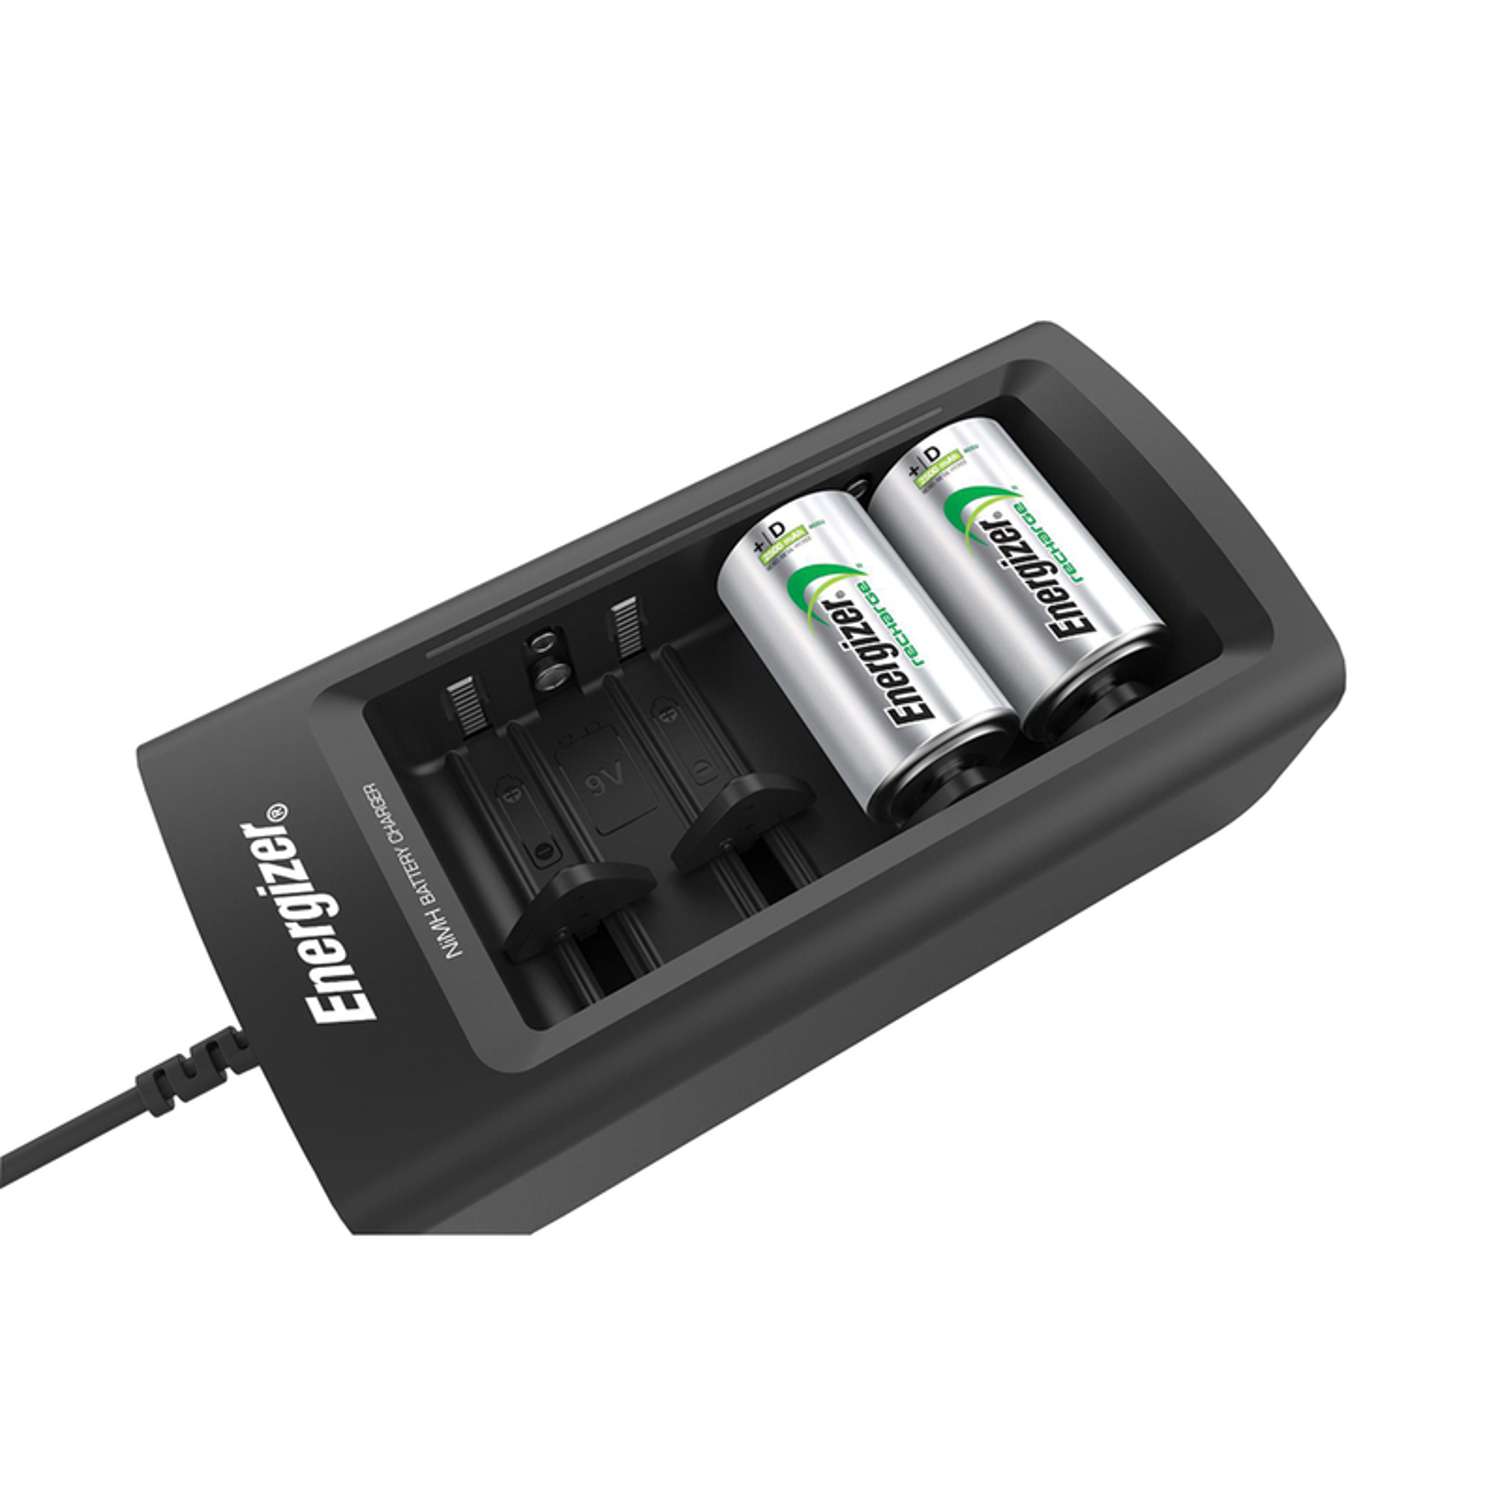 kwaliteit Aanzetten onderhoud Energizer Recharge 4 Battery Black Universal Battery Charger - Ace Hardware